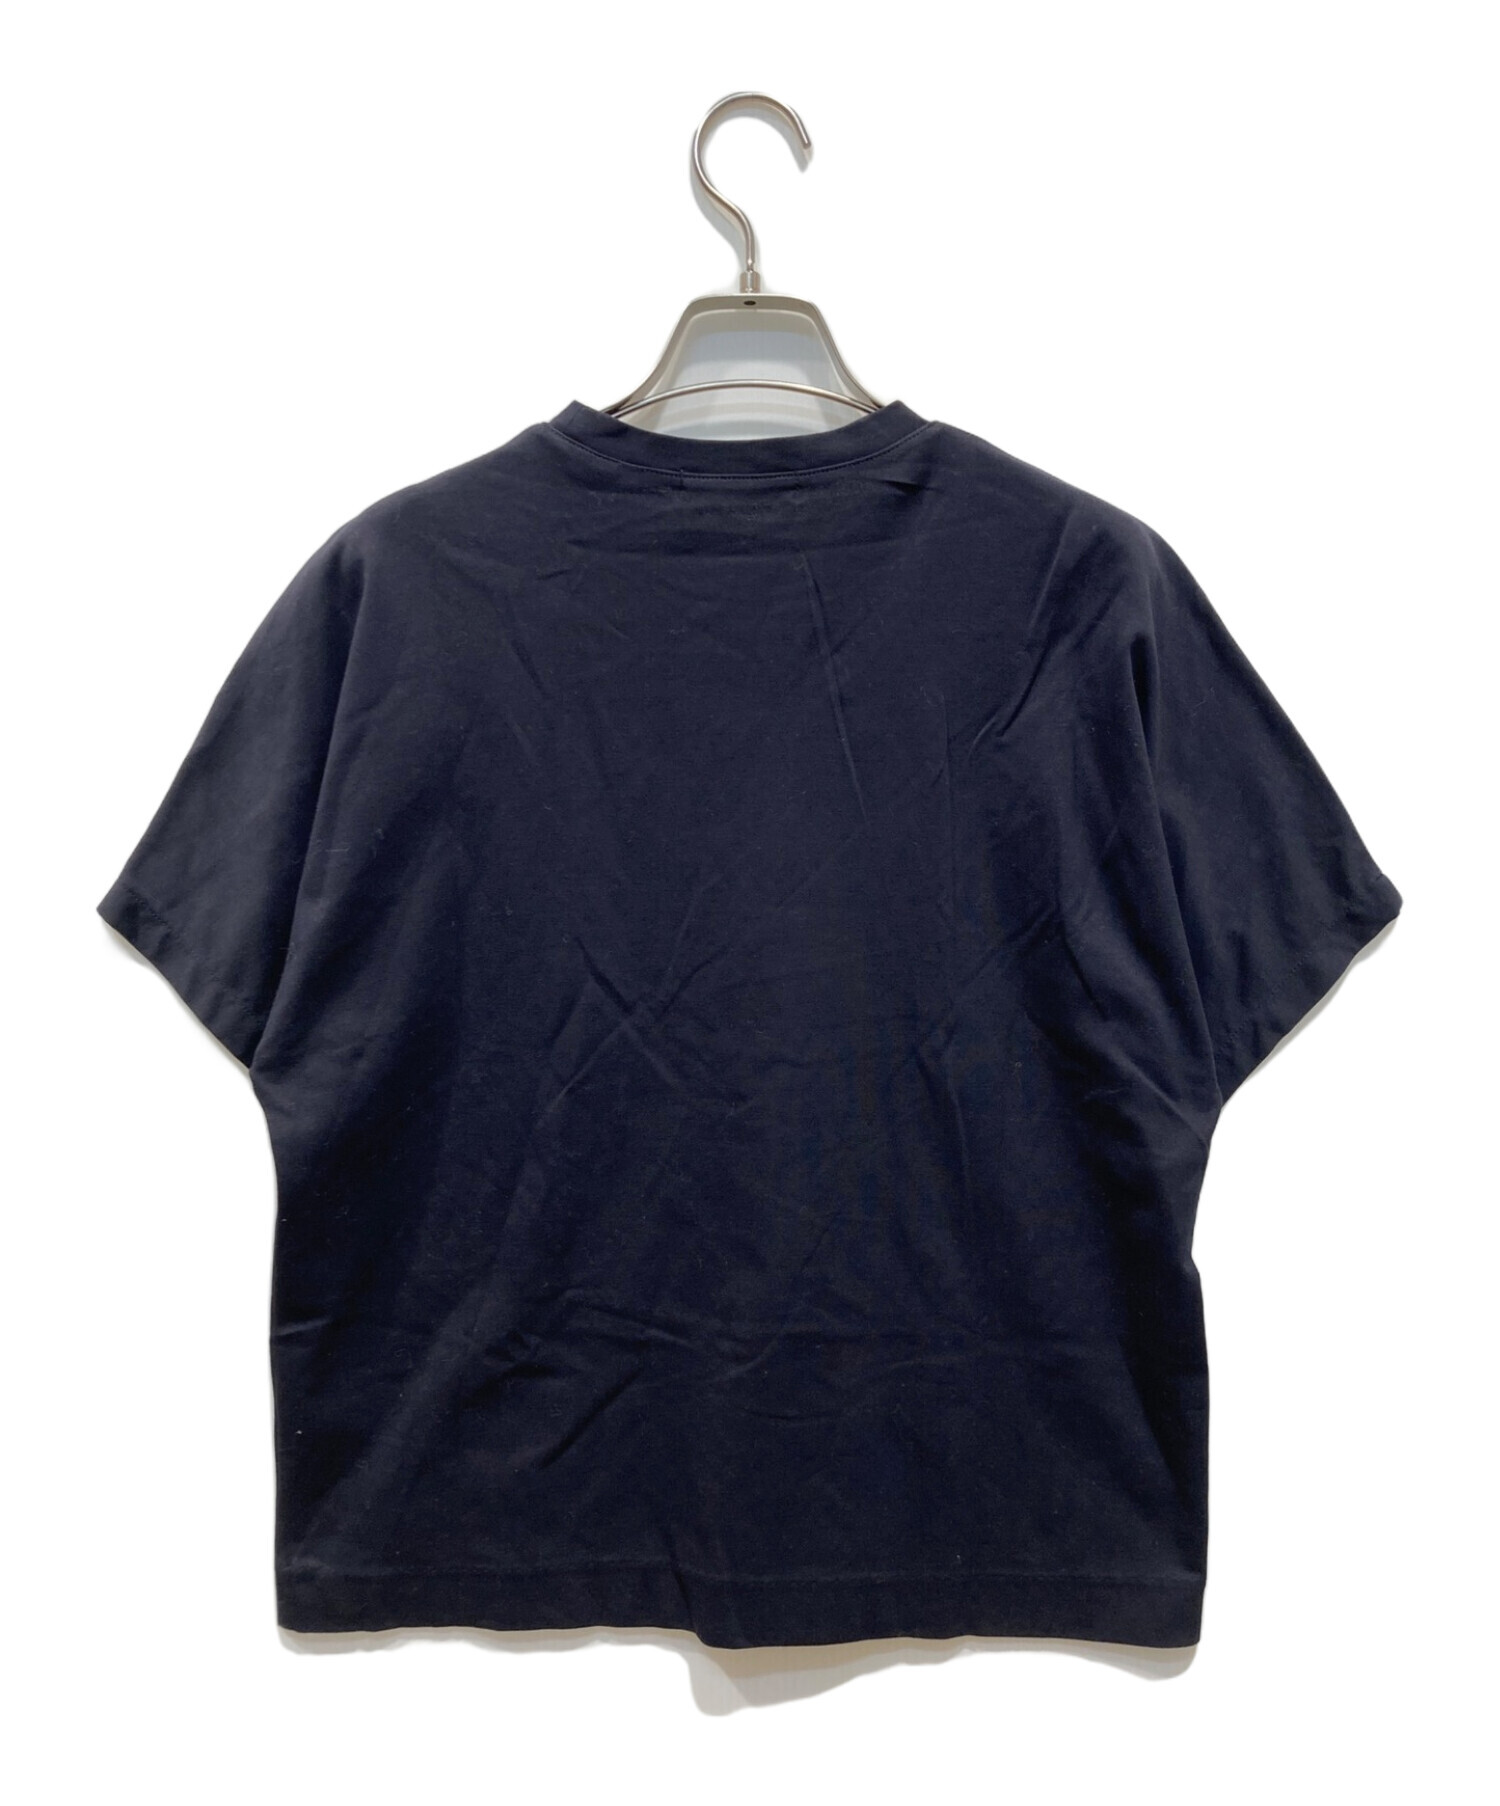 EBURE (エブール) 超長綿スーピマコットンTシャツ ネイビー サイズ:38